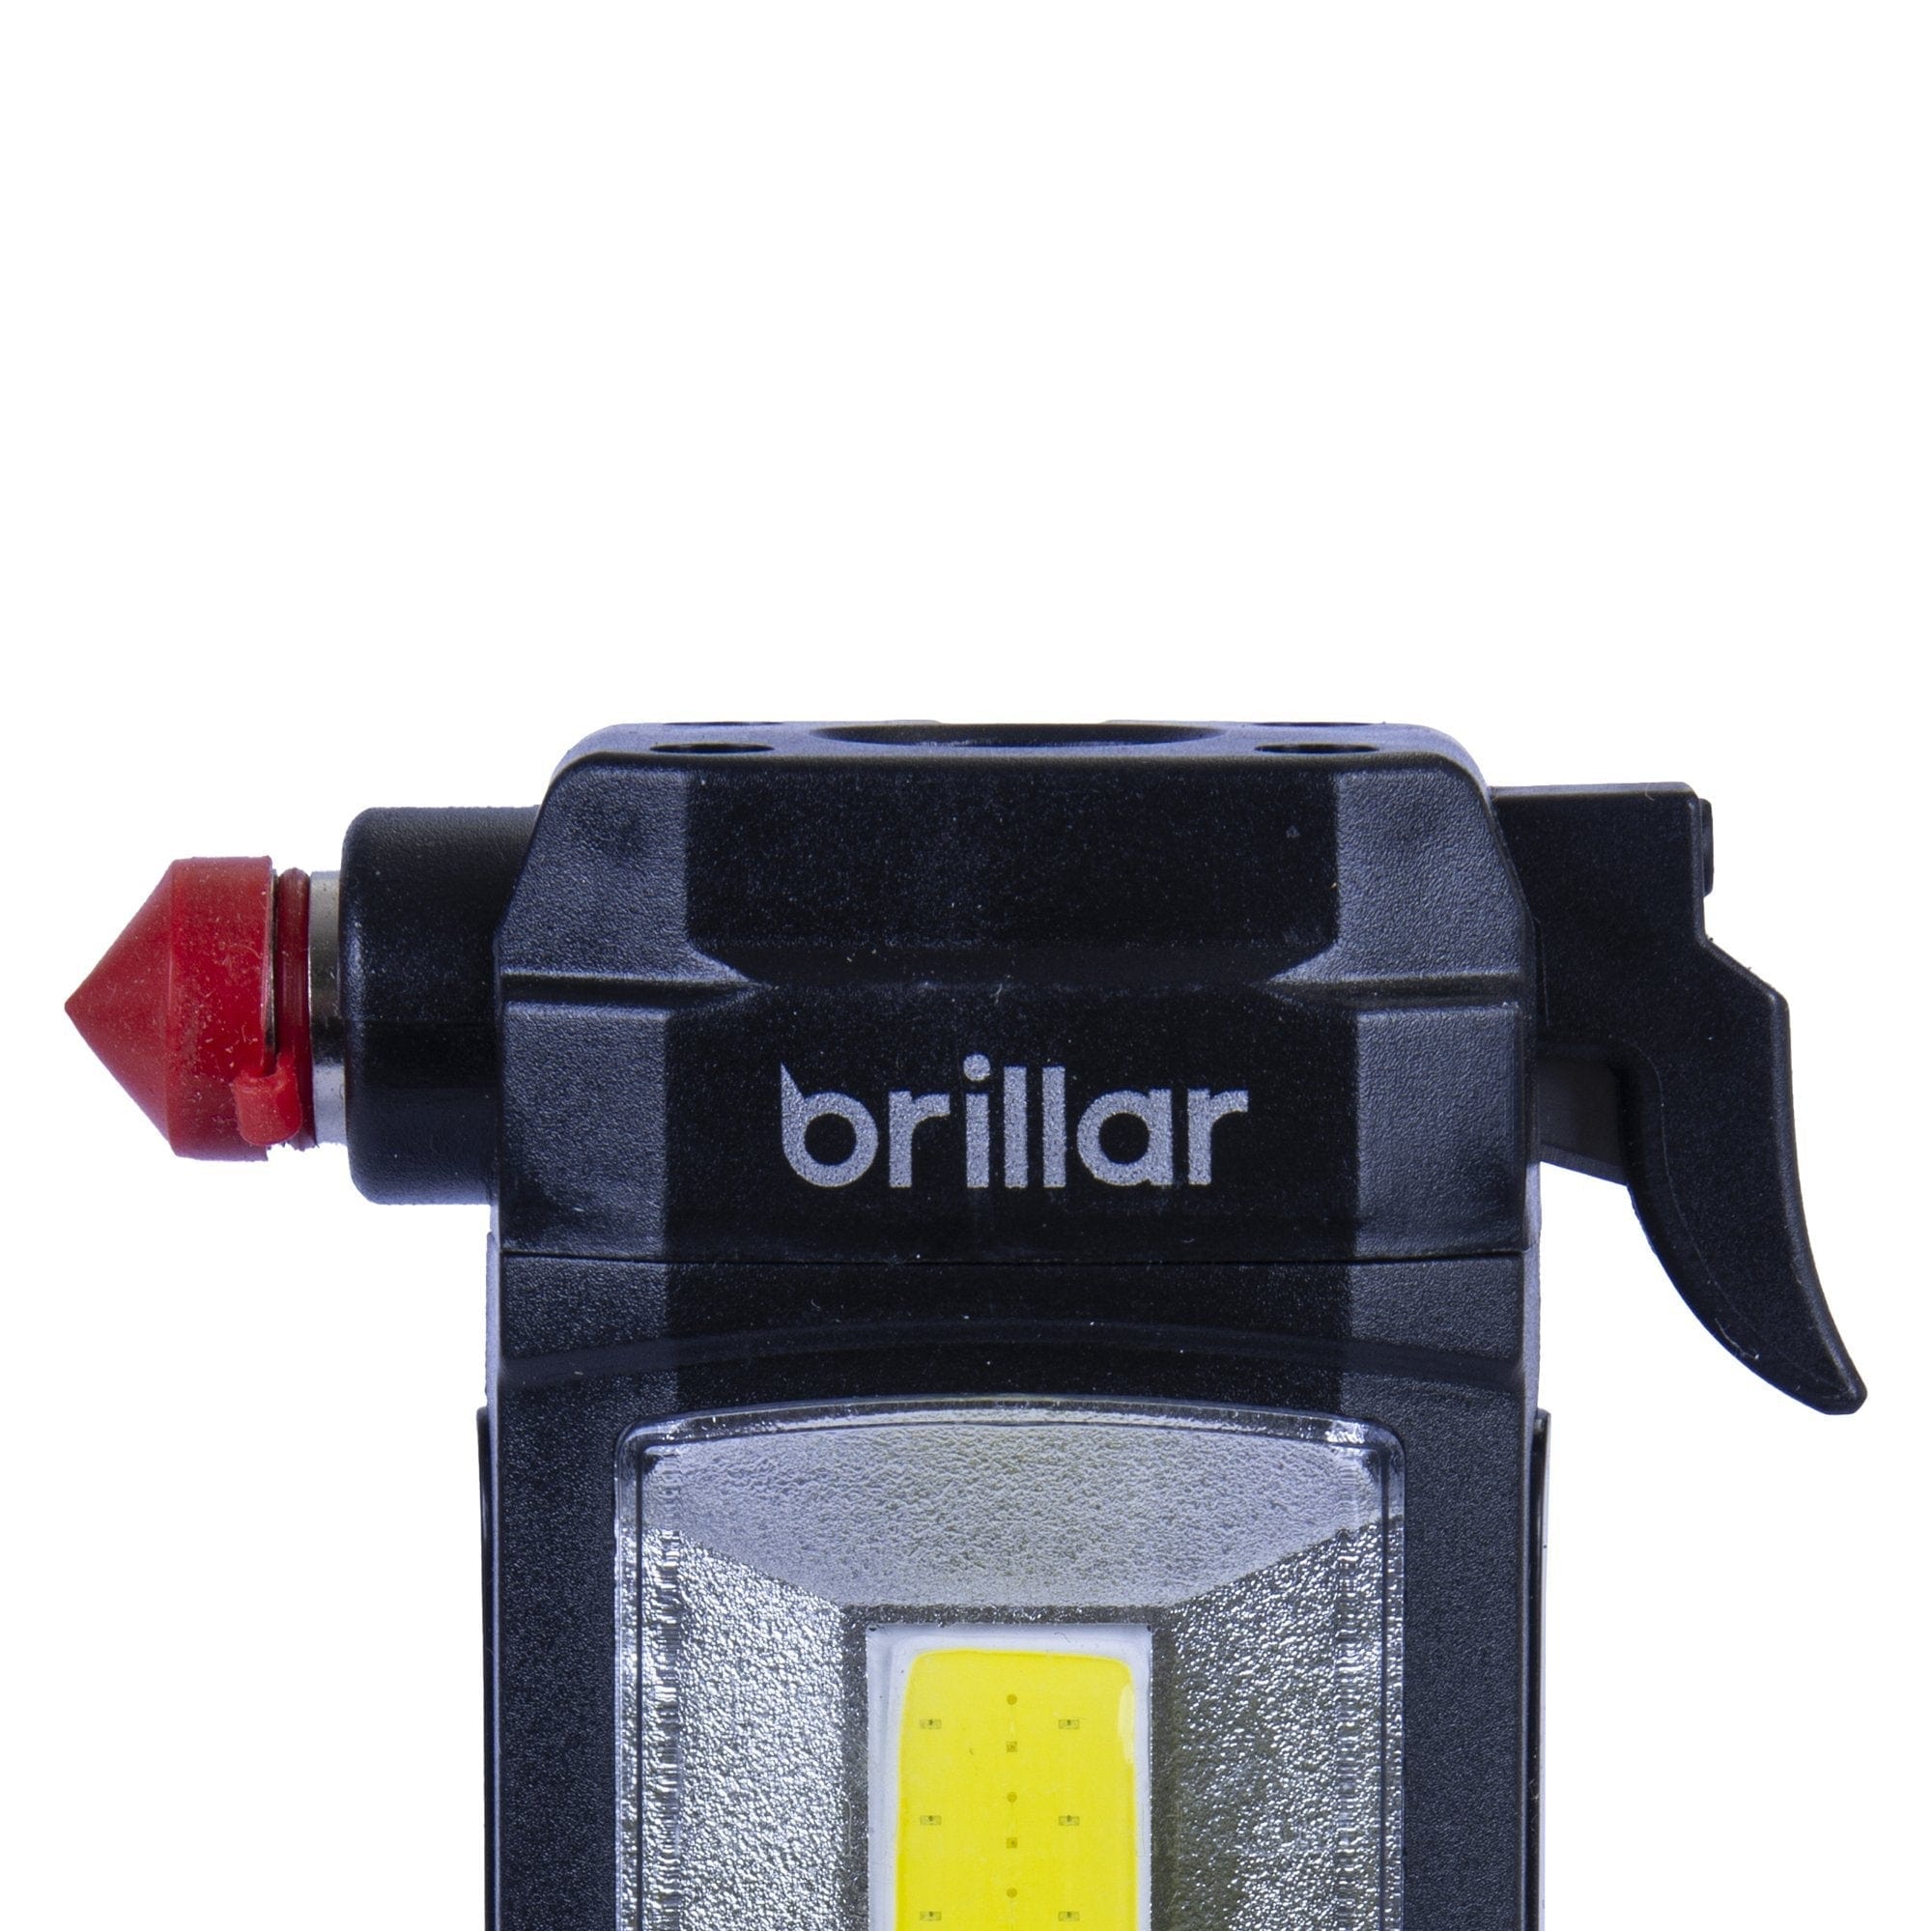 Brillar Electrical Emergency Torch, Seatbelt Cutter, Window Breaker - Black BR0042-Black